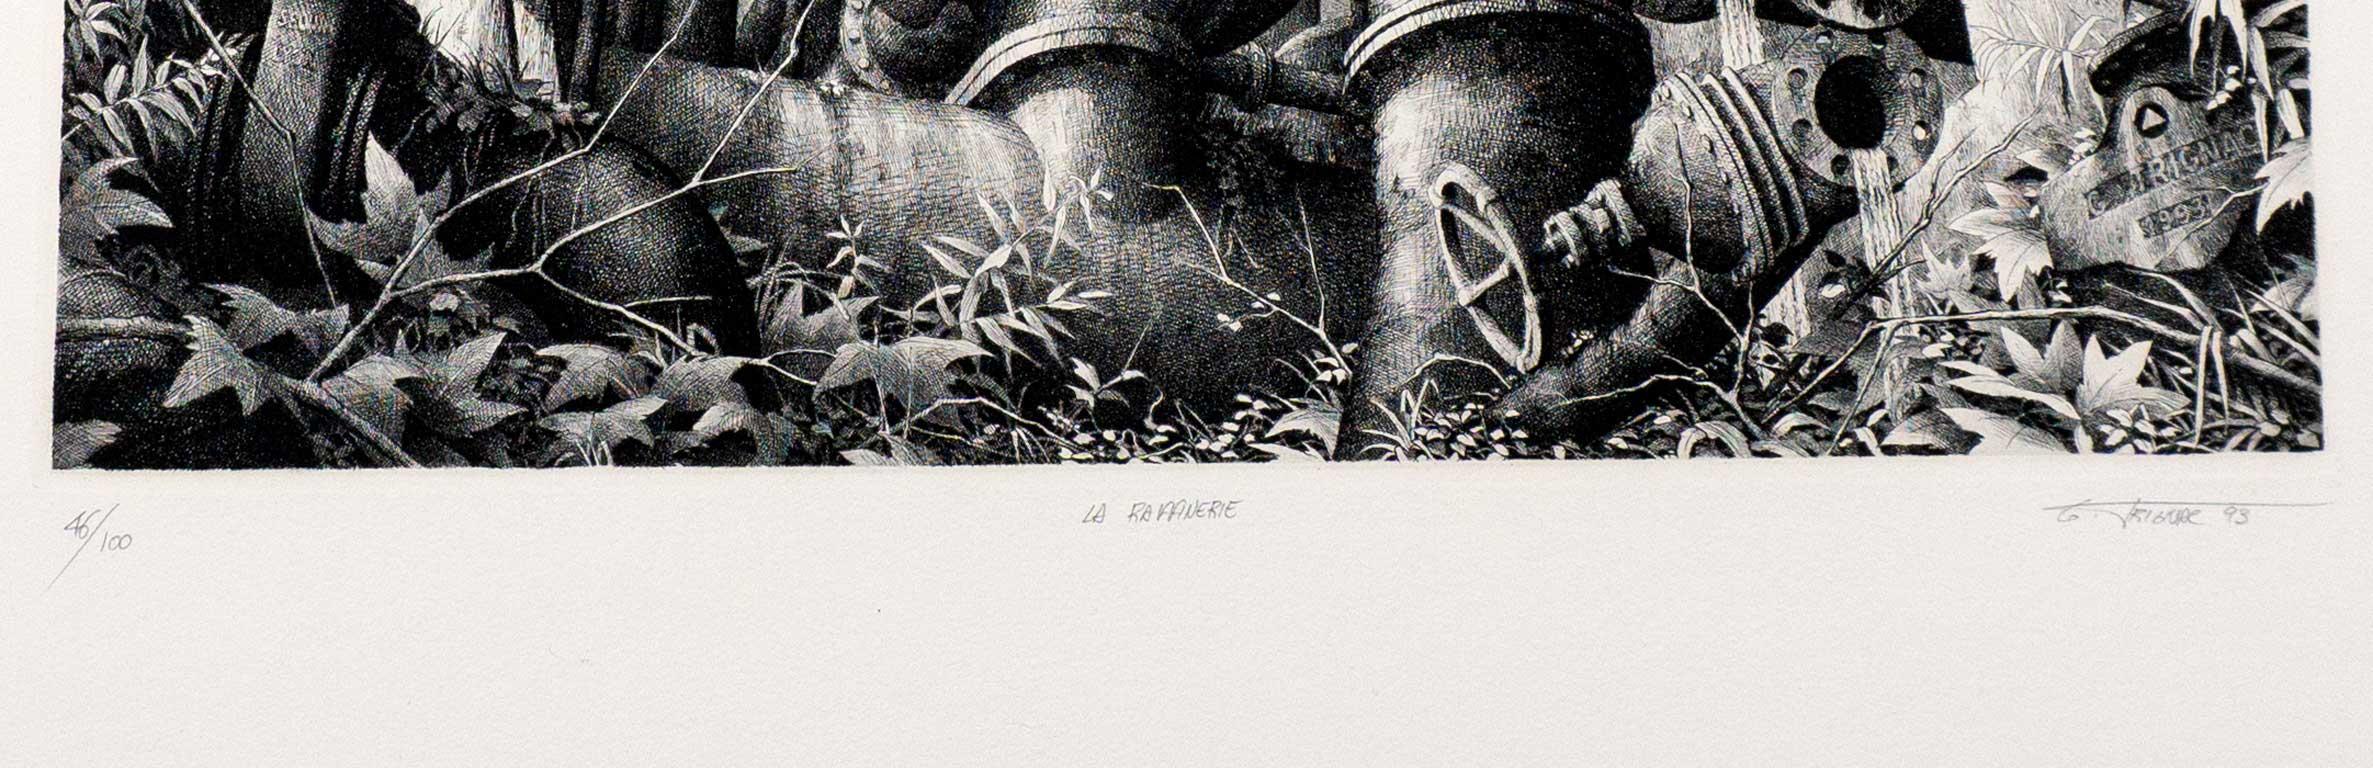 La Raffinerie - Surrealist Print by Gerard Trignac